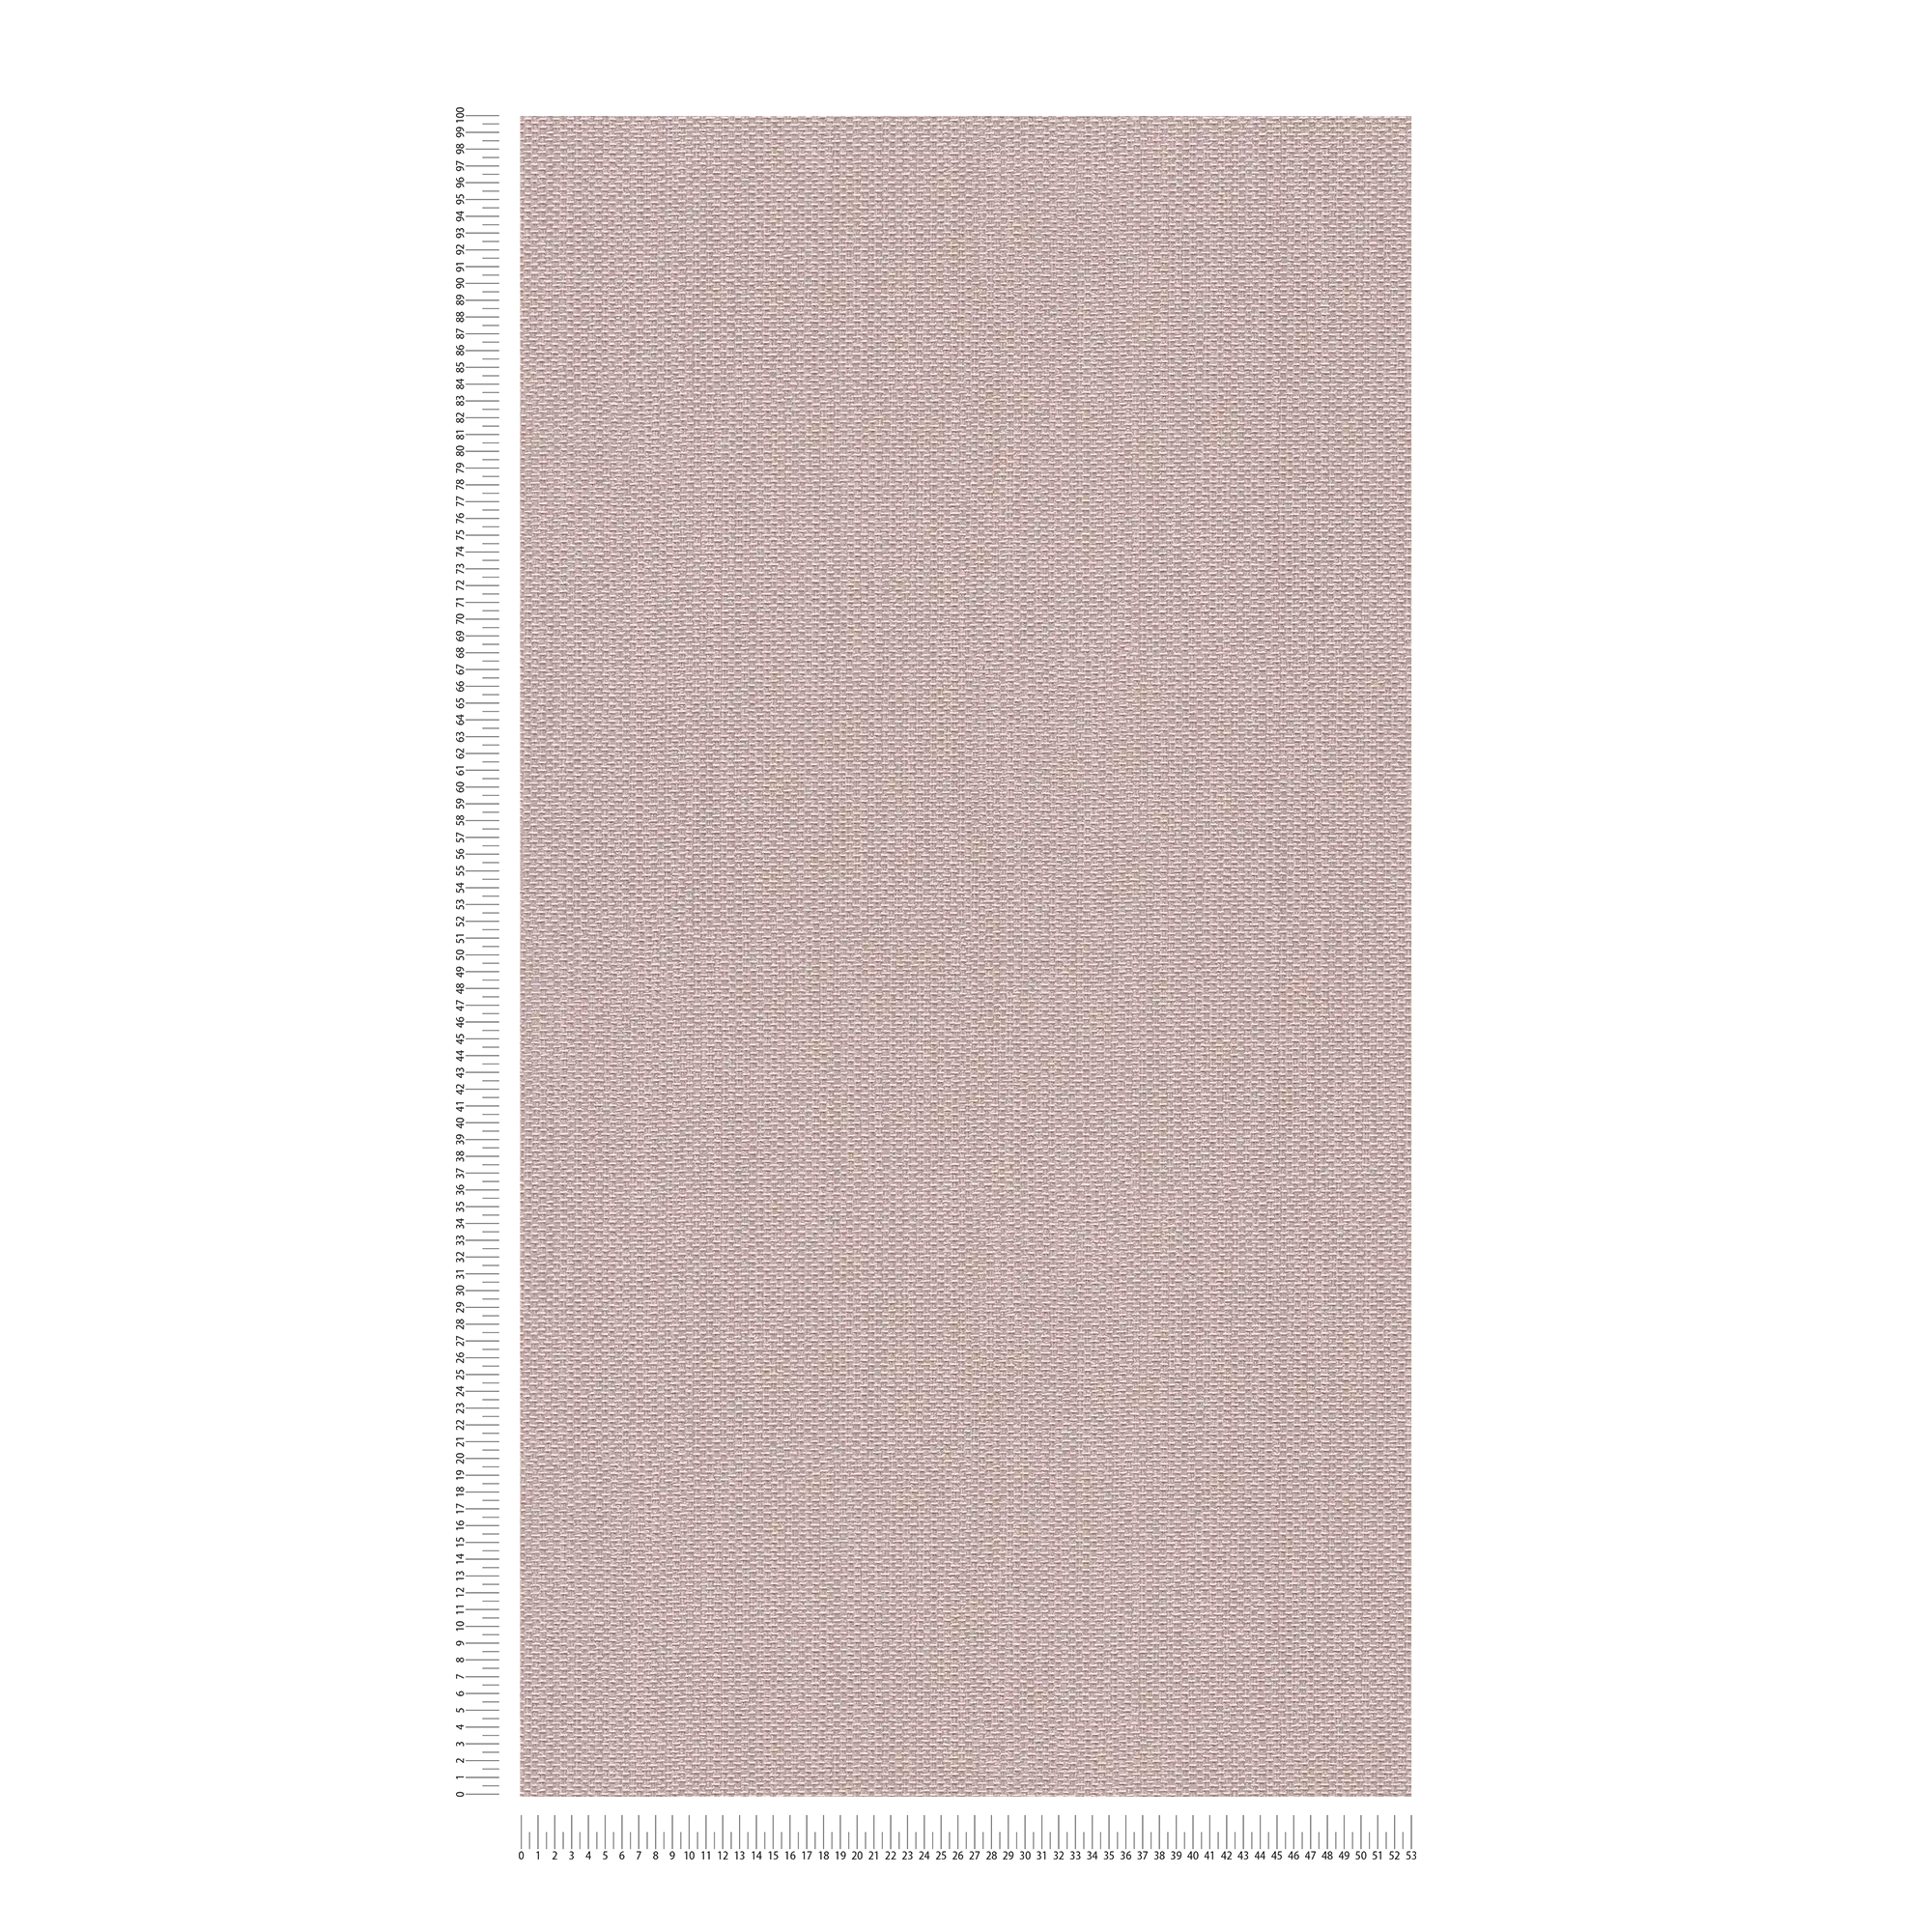             Strukturierte Vliestapete in Textiloptik – Rosa, Silber
        